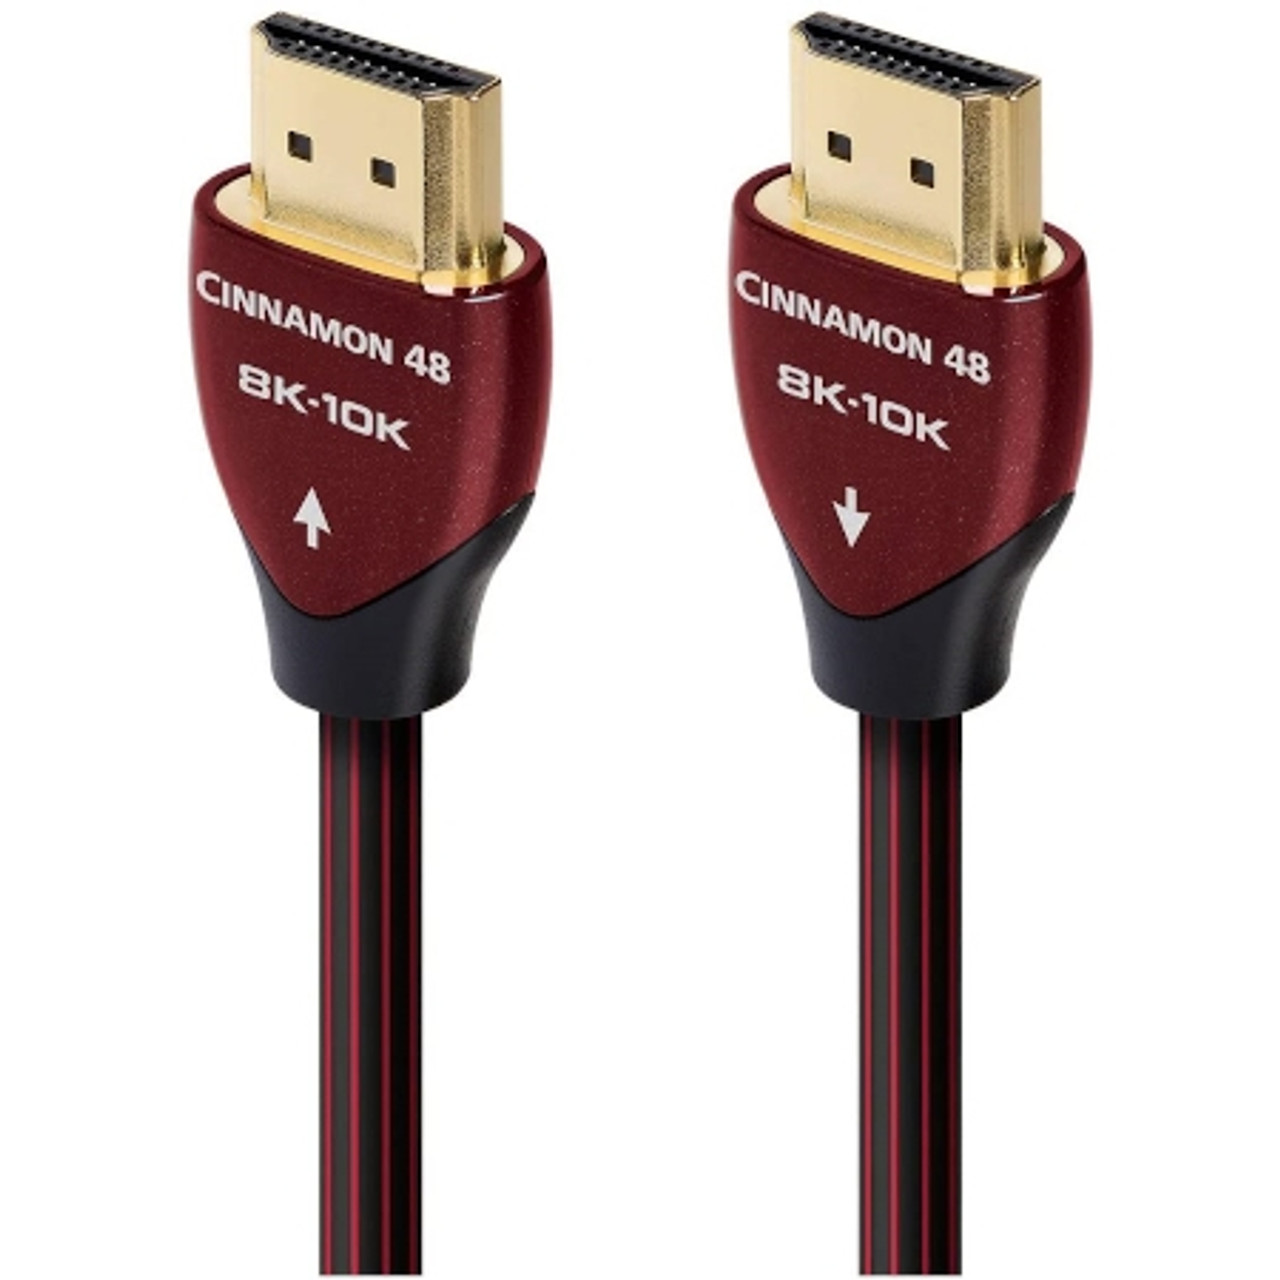 AUDIOQUEST HDM48CIN300 Cinnamon 48 3m HDMI Cable - Black/Red